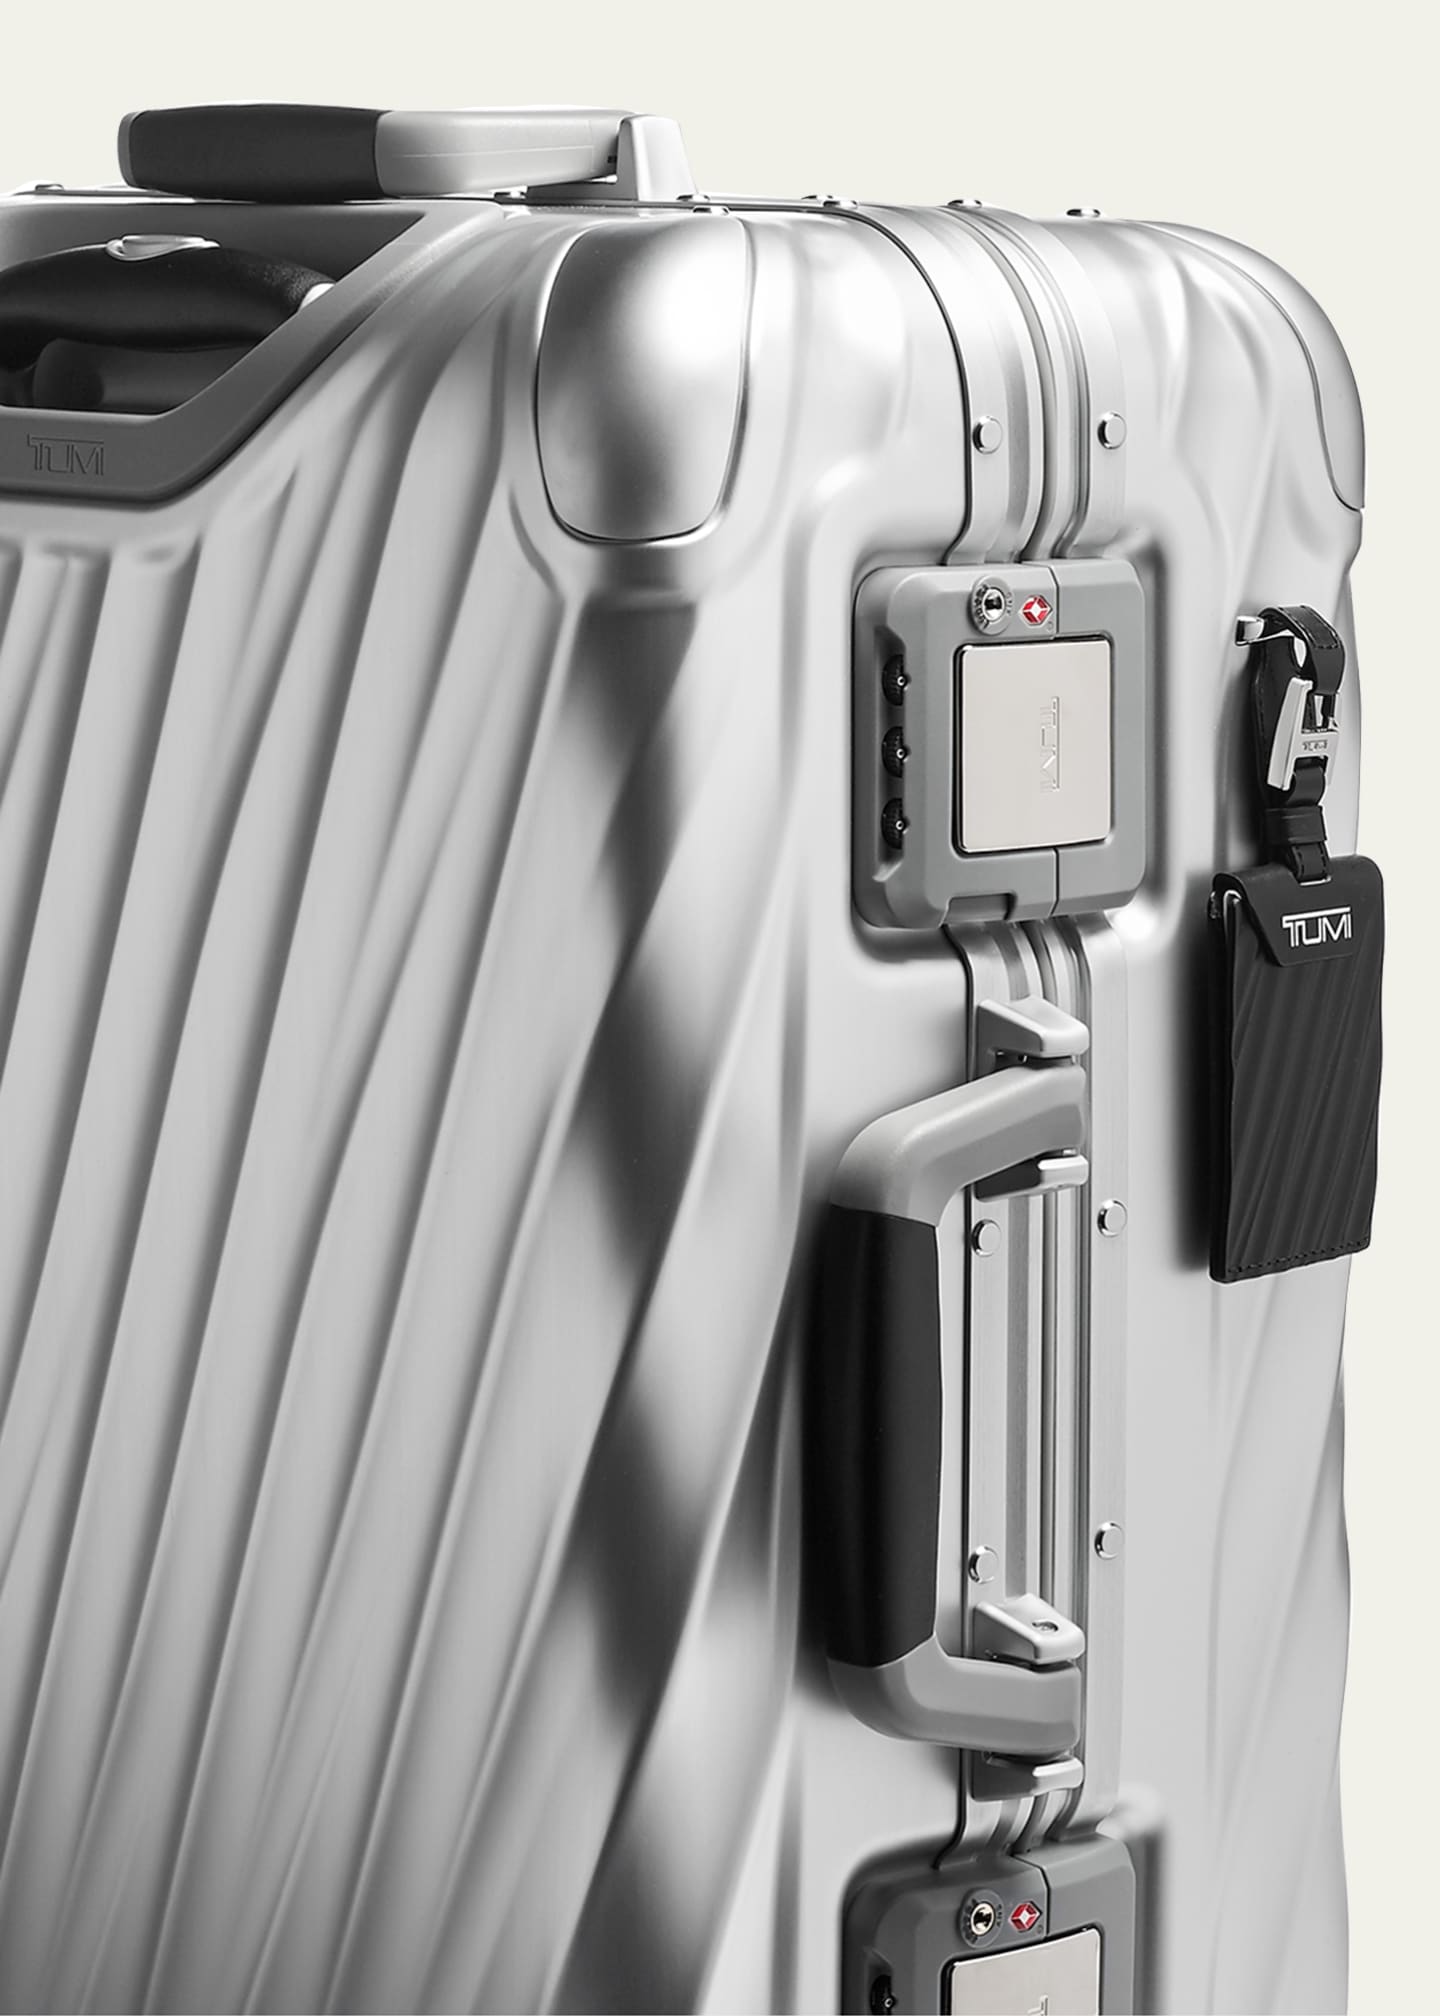 TUMI 19 Degree Aluminum Continental Carry-On Luggage - Bergdorf Goodman